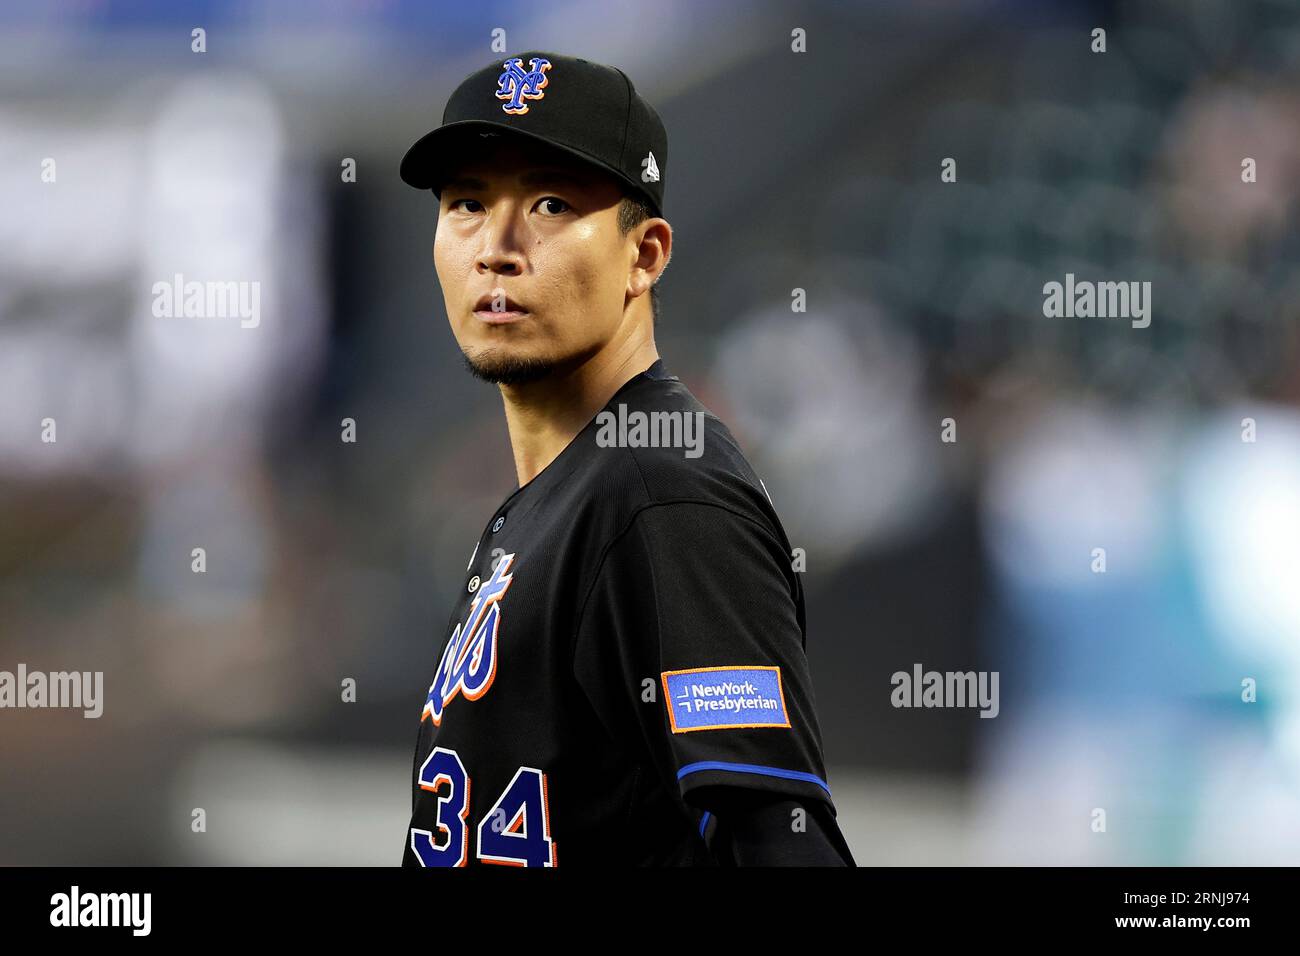 New York Mets starting pitcher Kodai Senga, of Japan, takes the